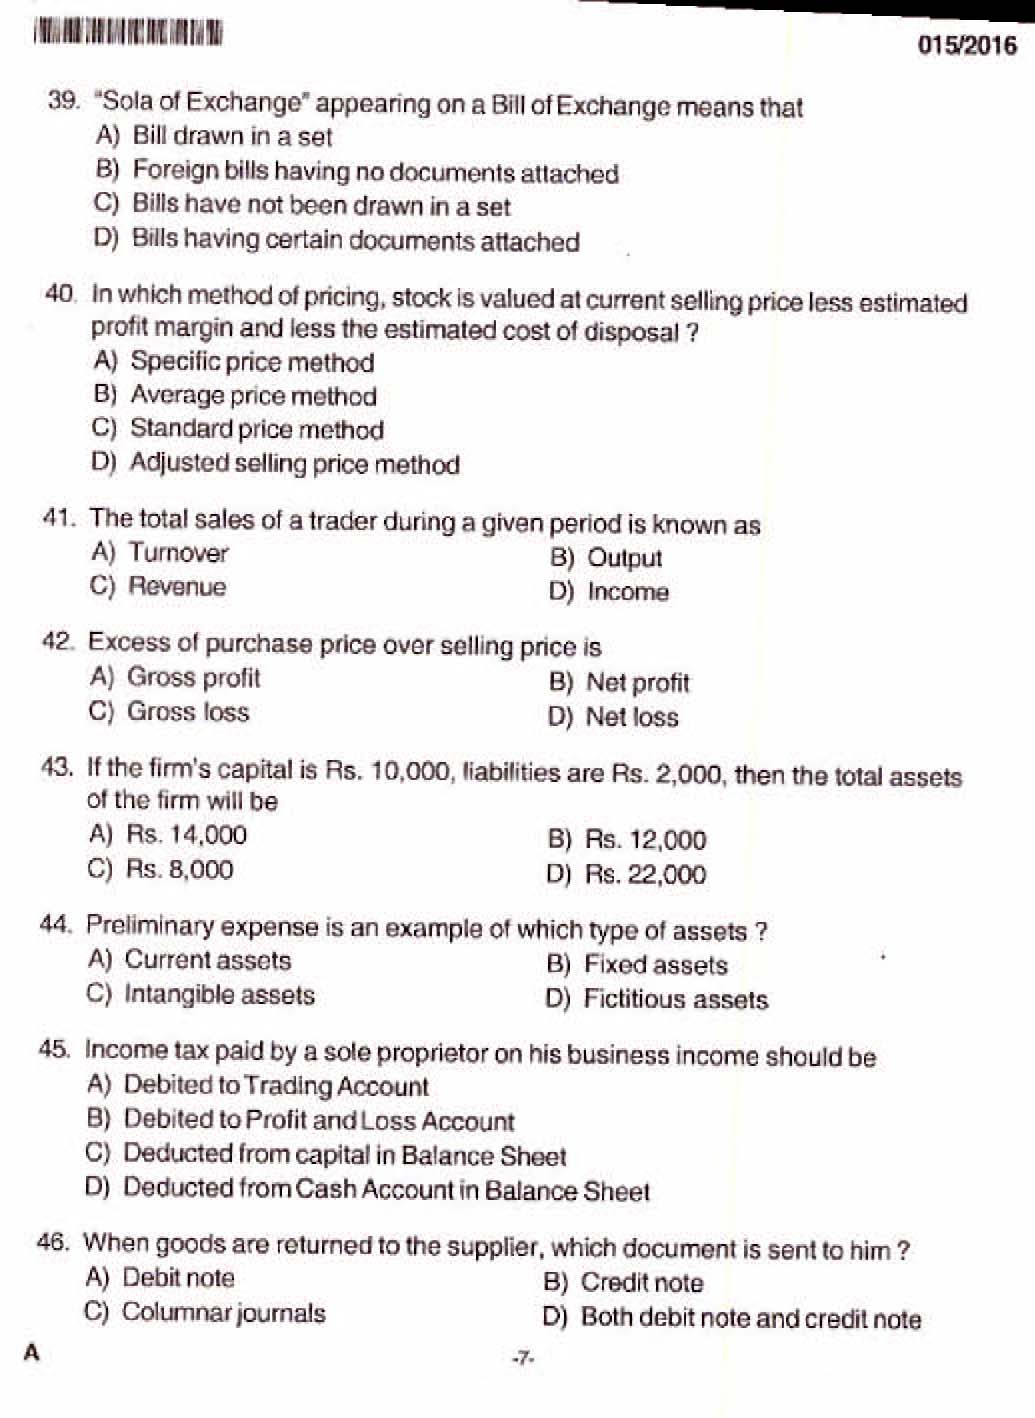 Kerala PSC Divisional Accountant OMR Exam 2016 Question Paper Code 0152016 5